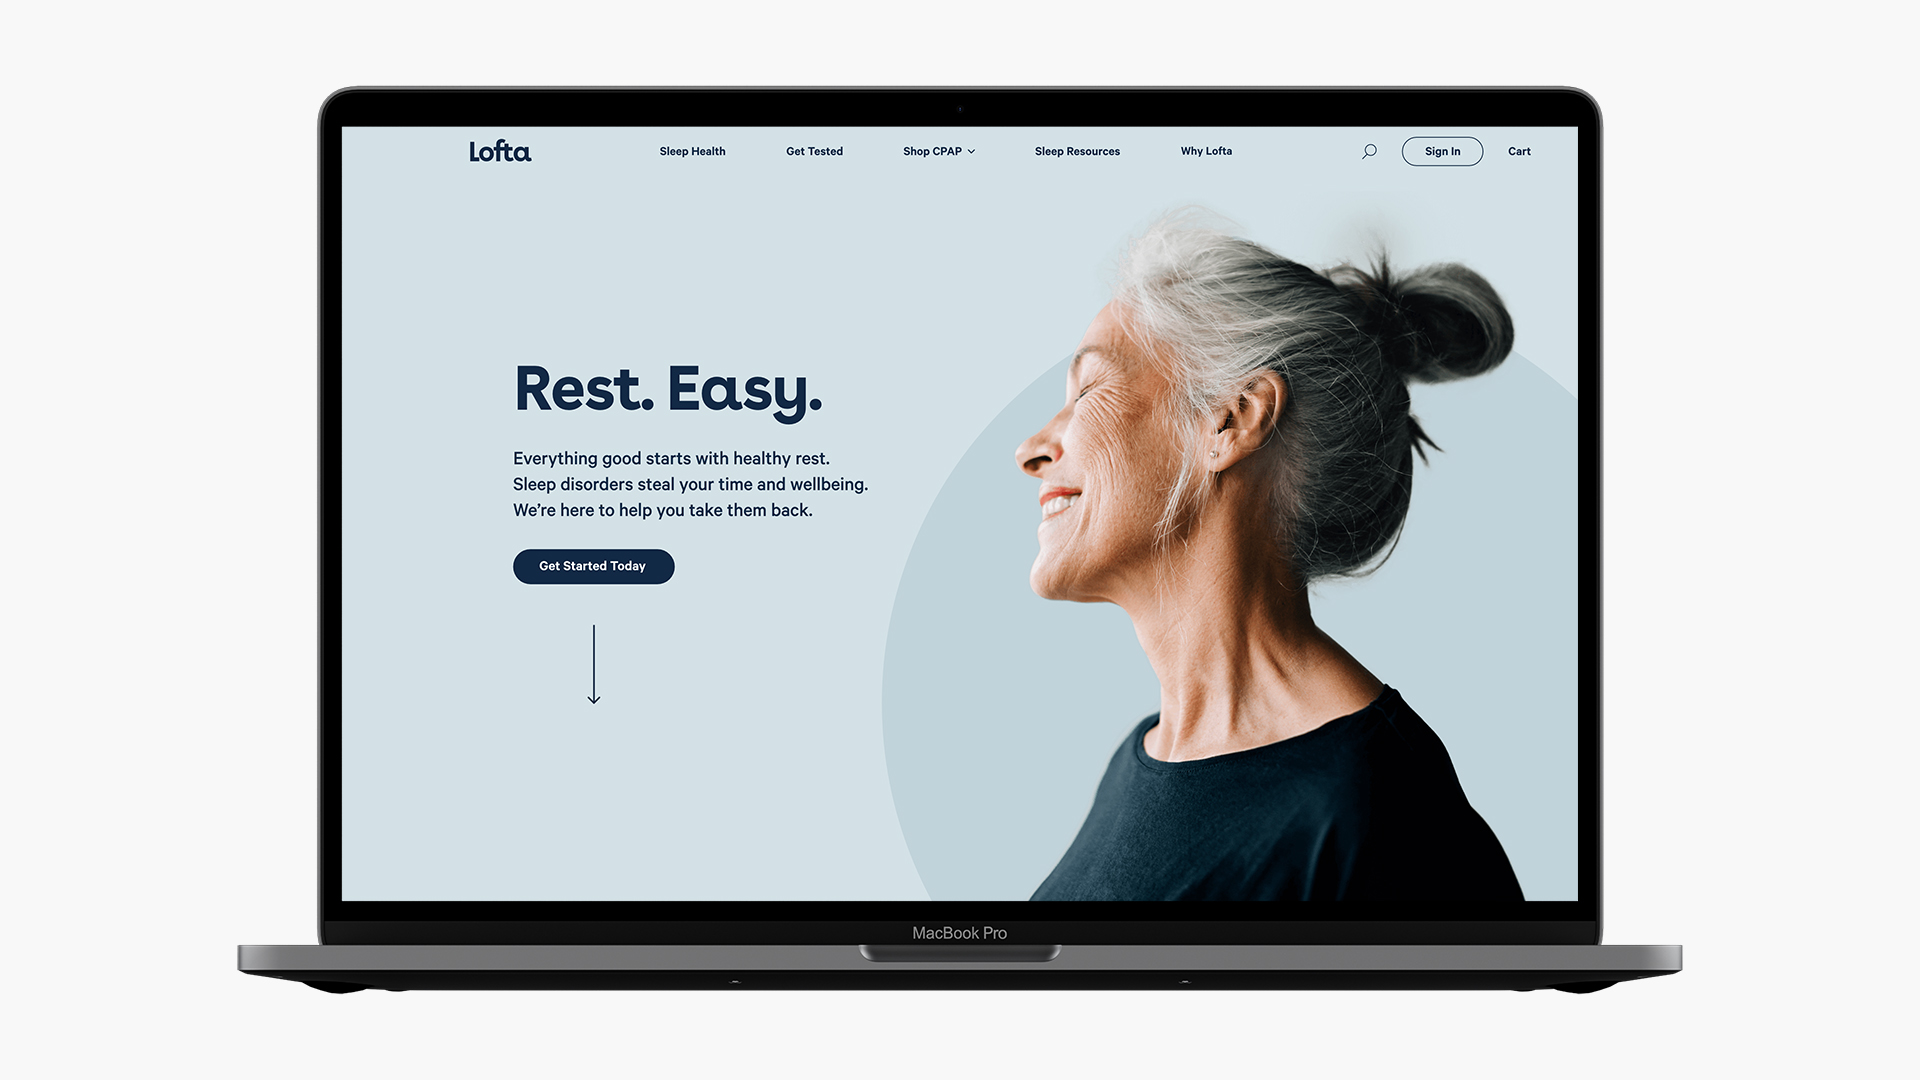 MiresBall Brand Design Creates a More Human Digital Brand Experience for Lofta